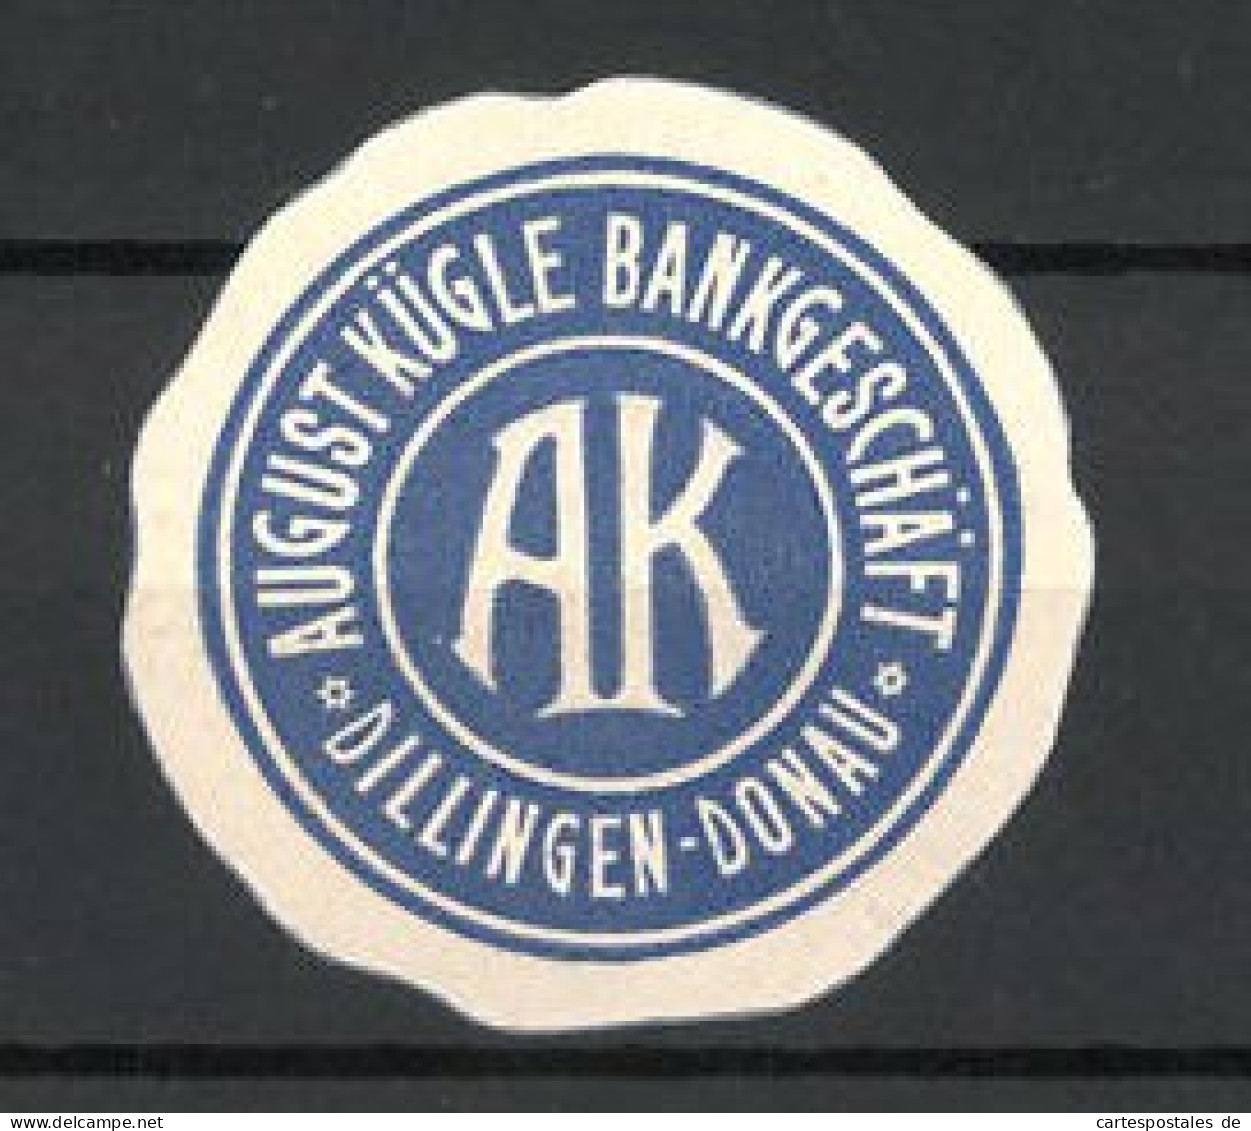 Reklamemarke August Kügle Bankgeschäft, Dillingen / Donau, Firmenlogo  - Erinnophilie